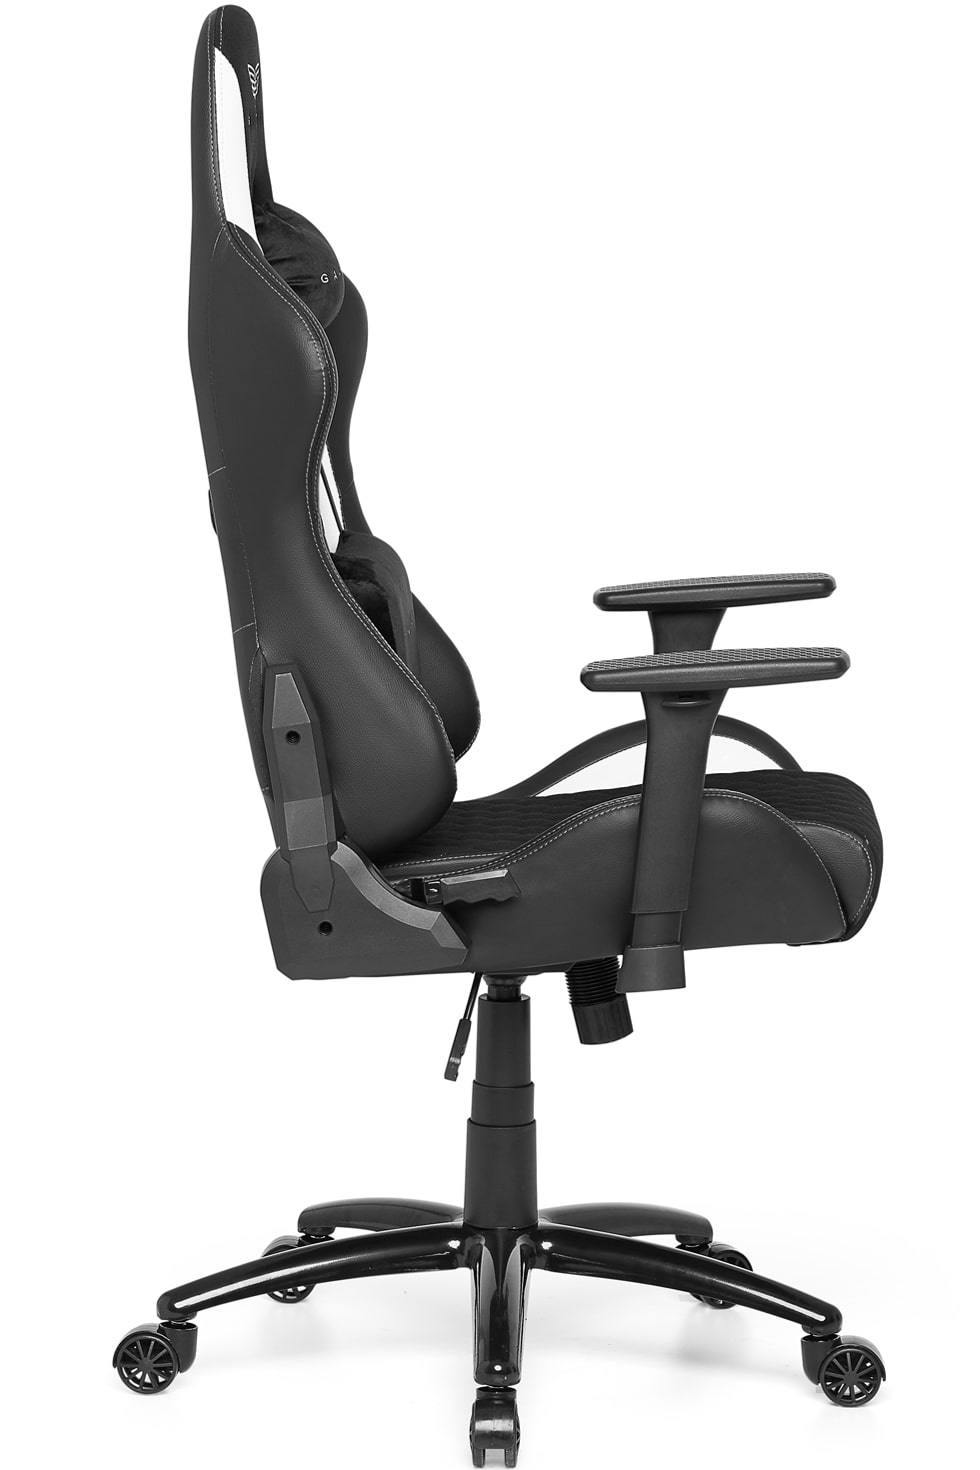 Gamvis PHANTOM Fabric Gaming Chair - Black/White